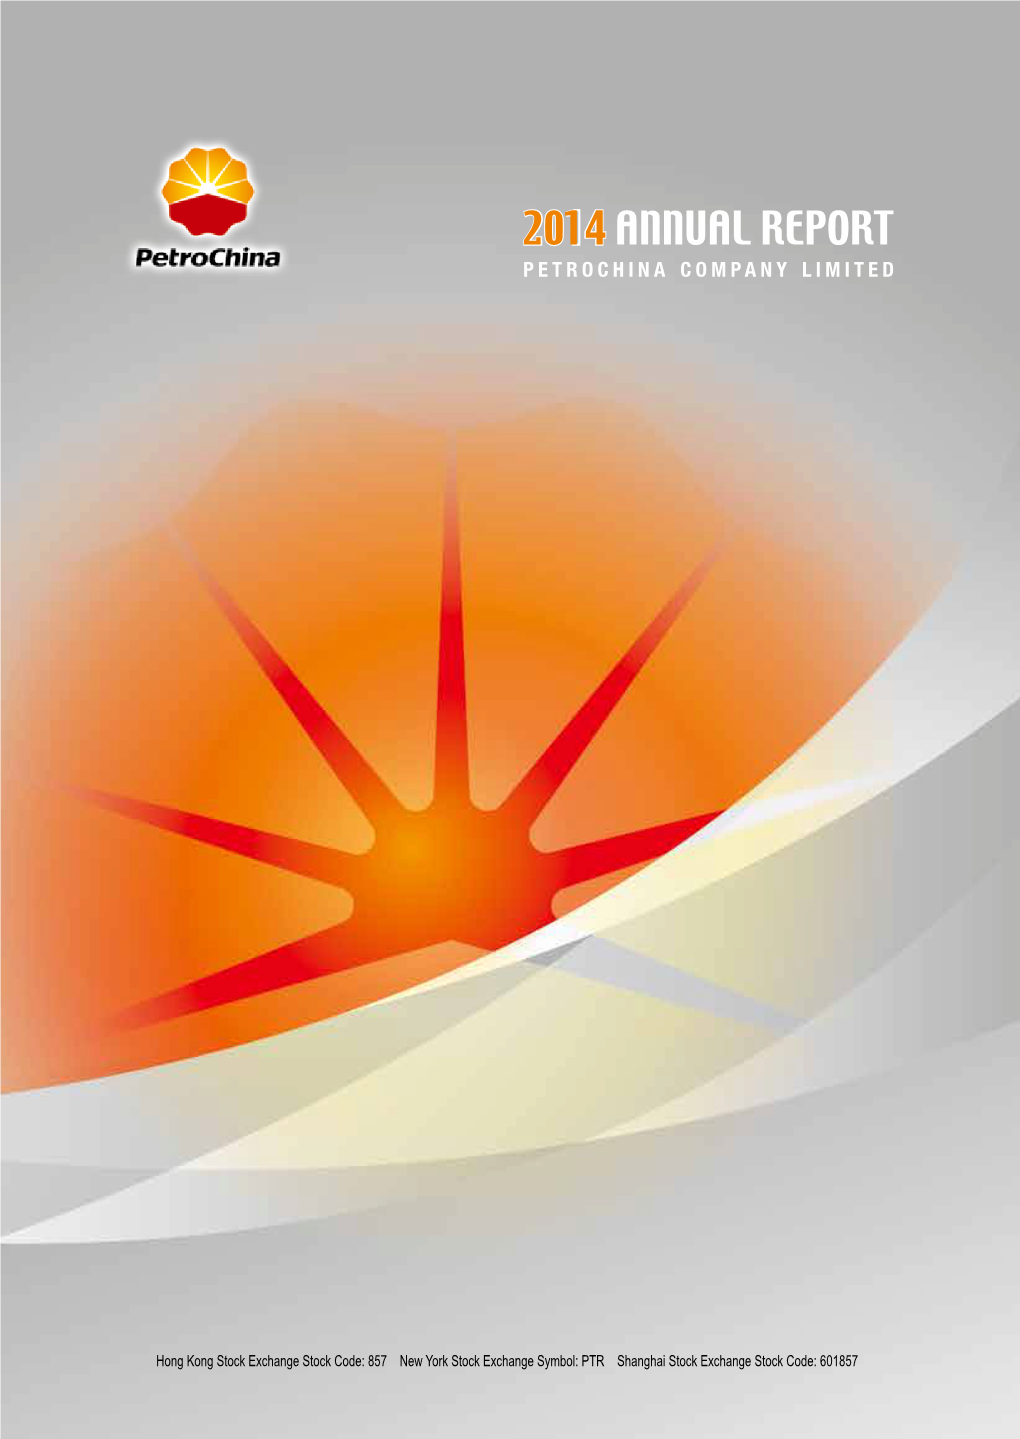 2014 Annual Report 2014 Annual2014 Report 年度 告 Petrochina Company中國石油天然氣股份有限公司 Limited 年度